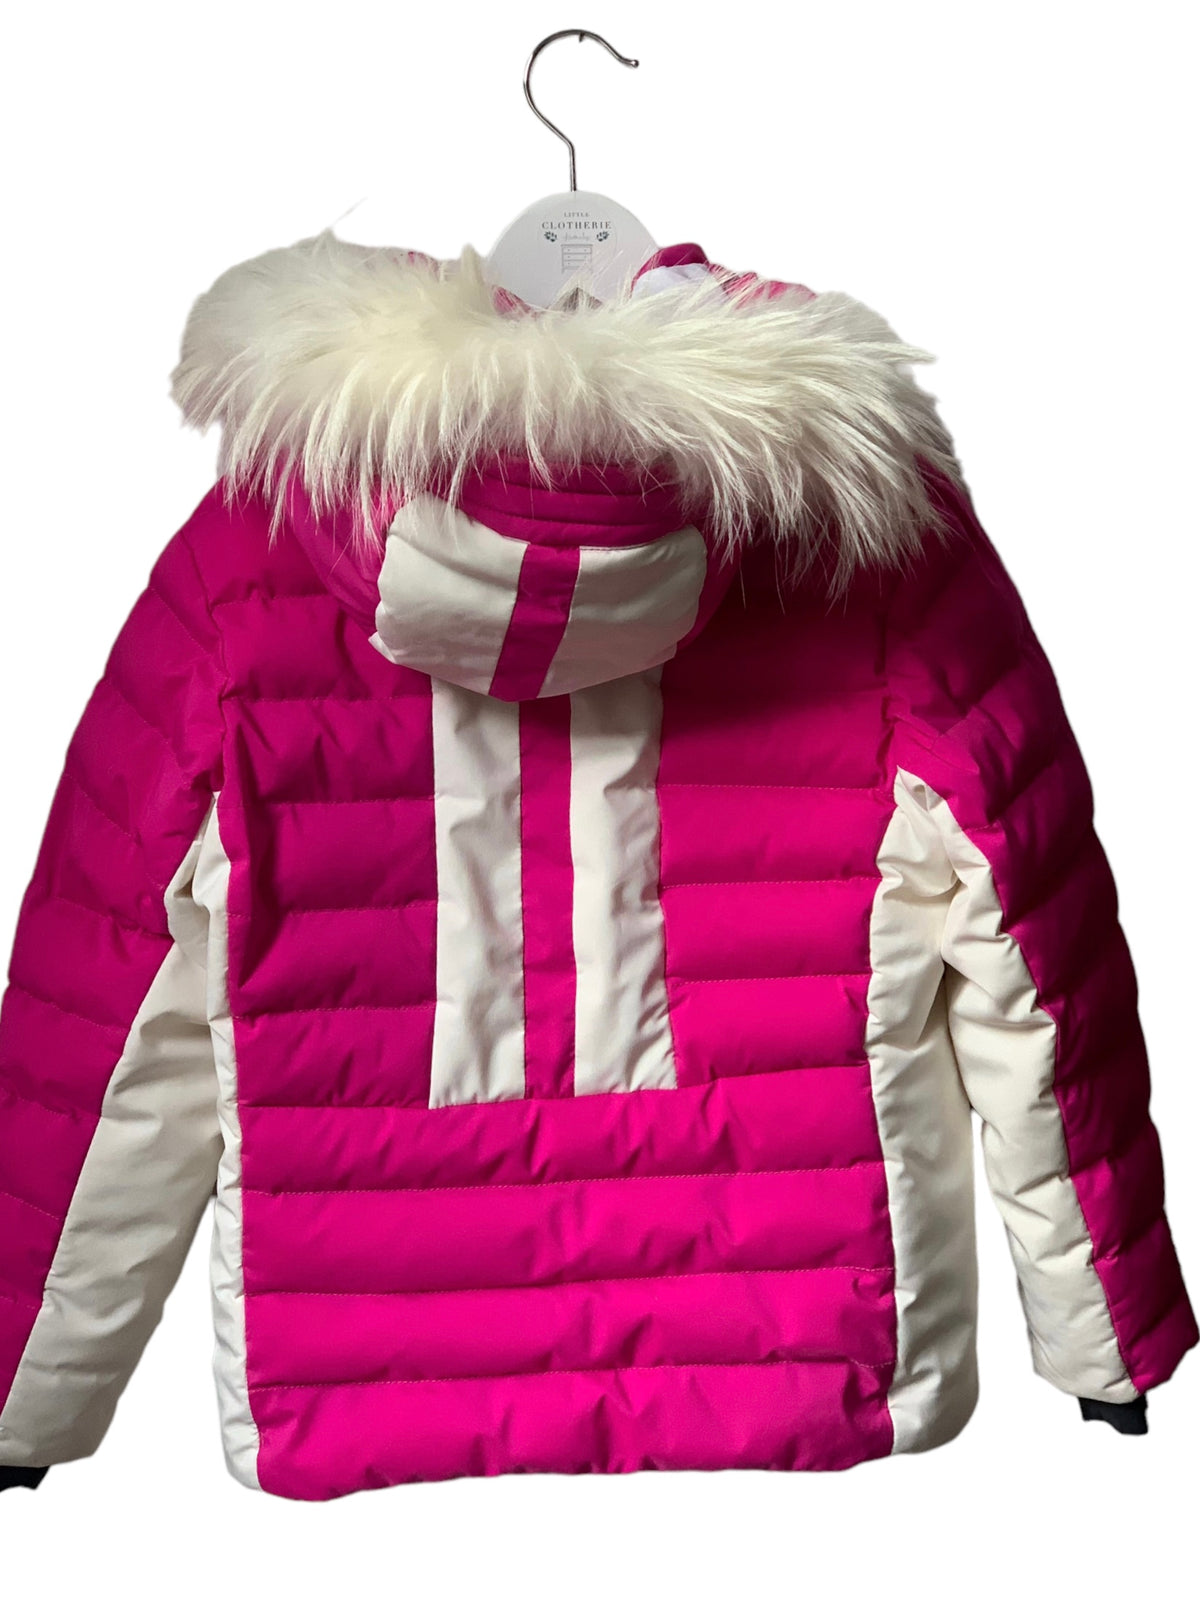 Veste ski rose et blanc fille Fusalp 8 ans